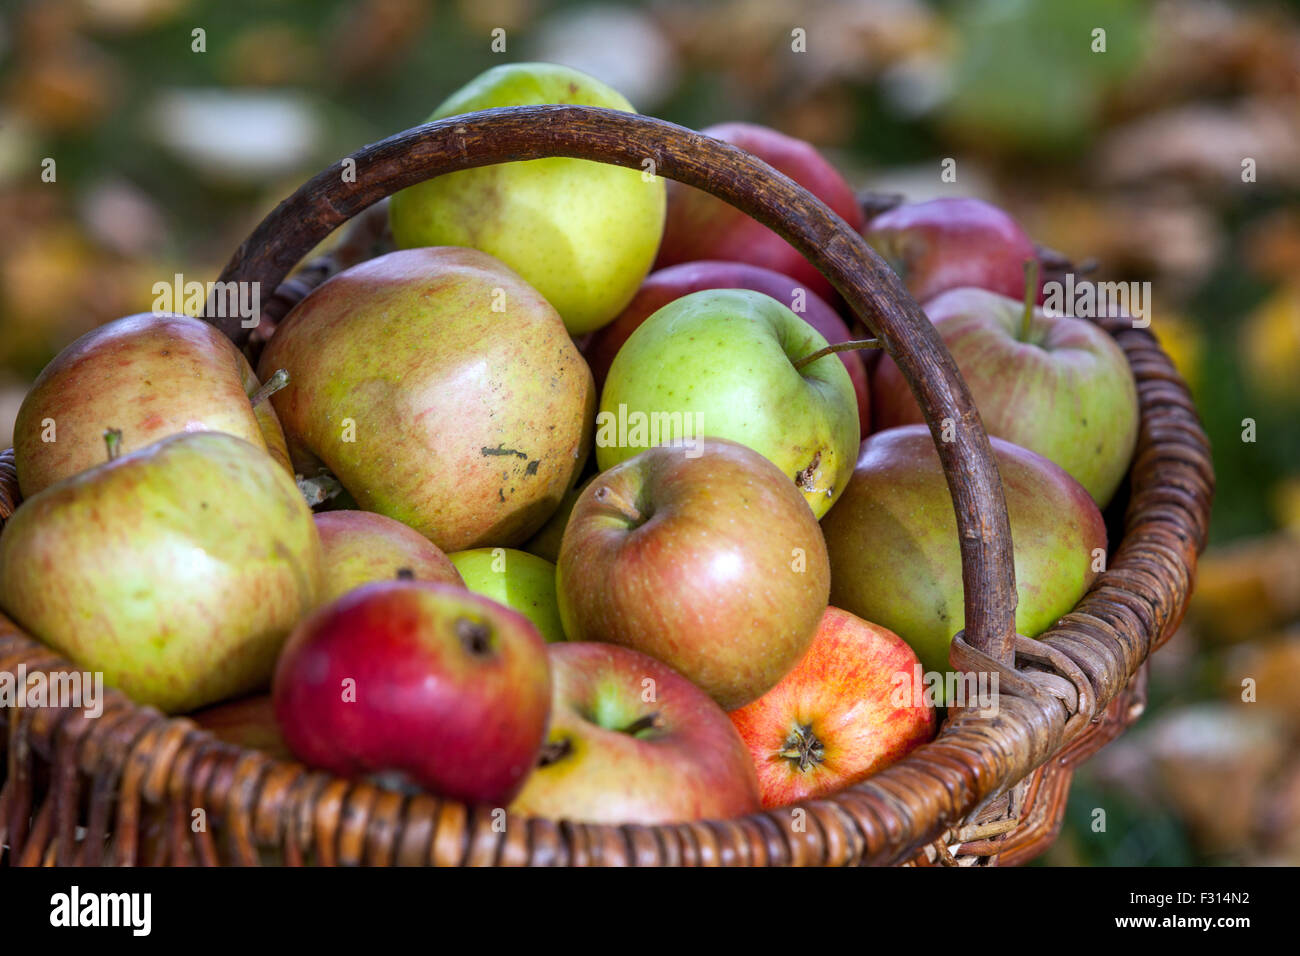 Apples in basket wicker basket autumn harvest picked fruits Stock Photo